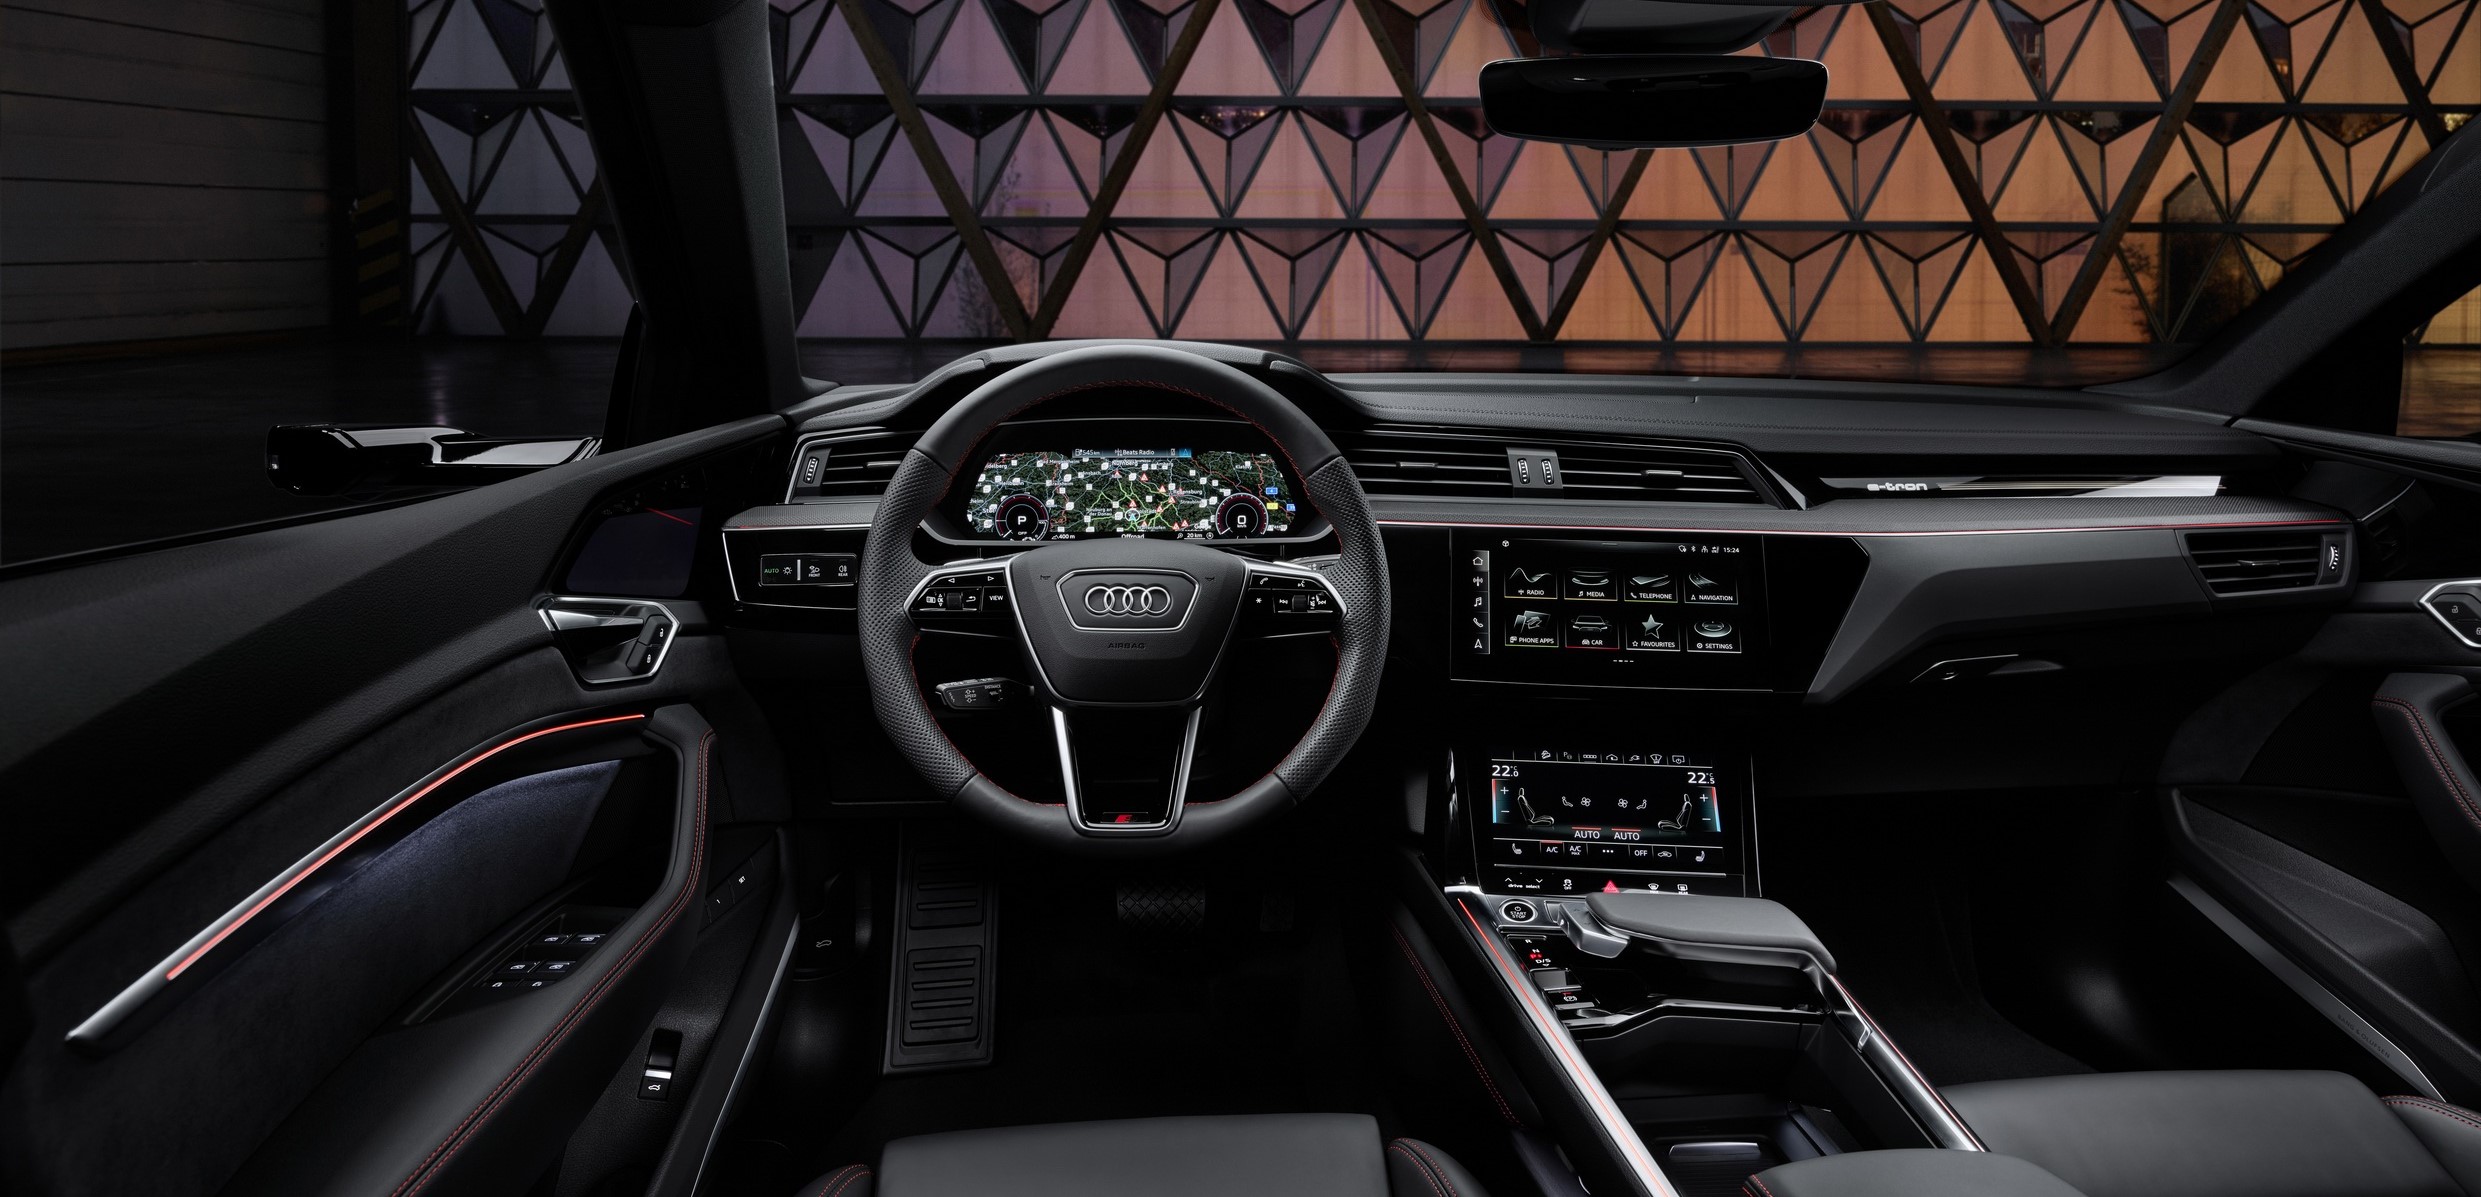 The new Audi Q8 e-tron SUV has a maximum range of 373 miles